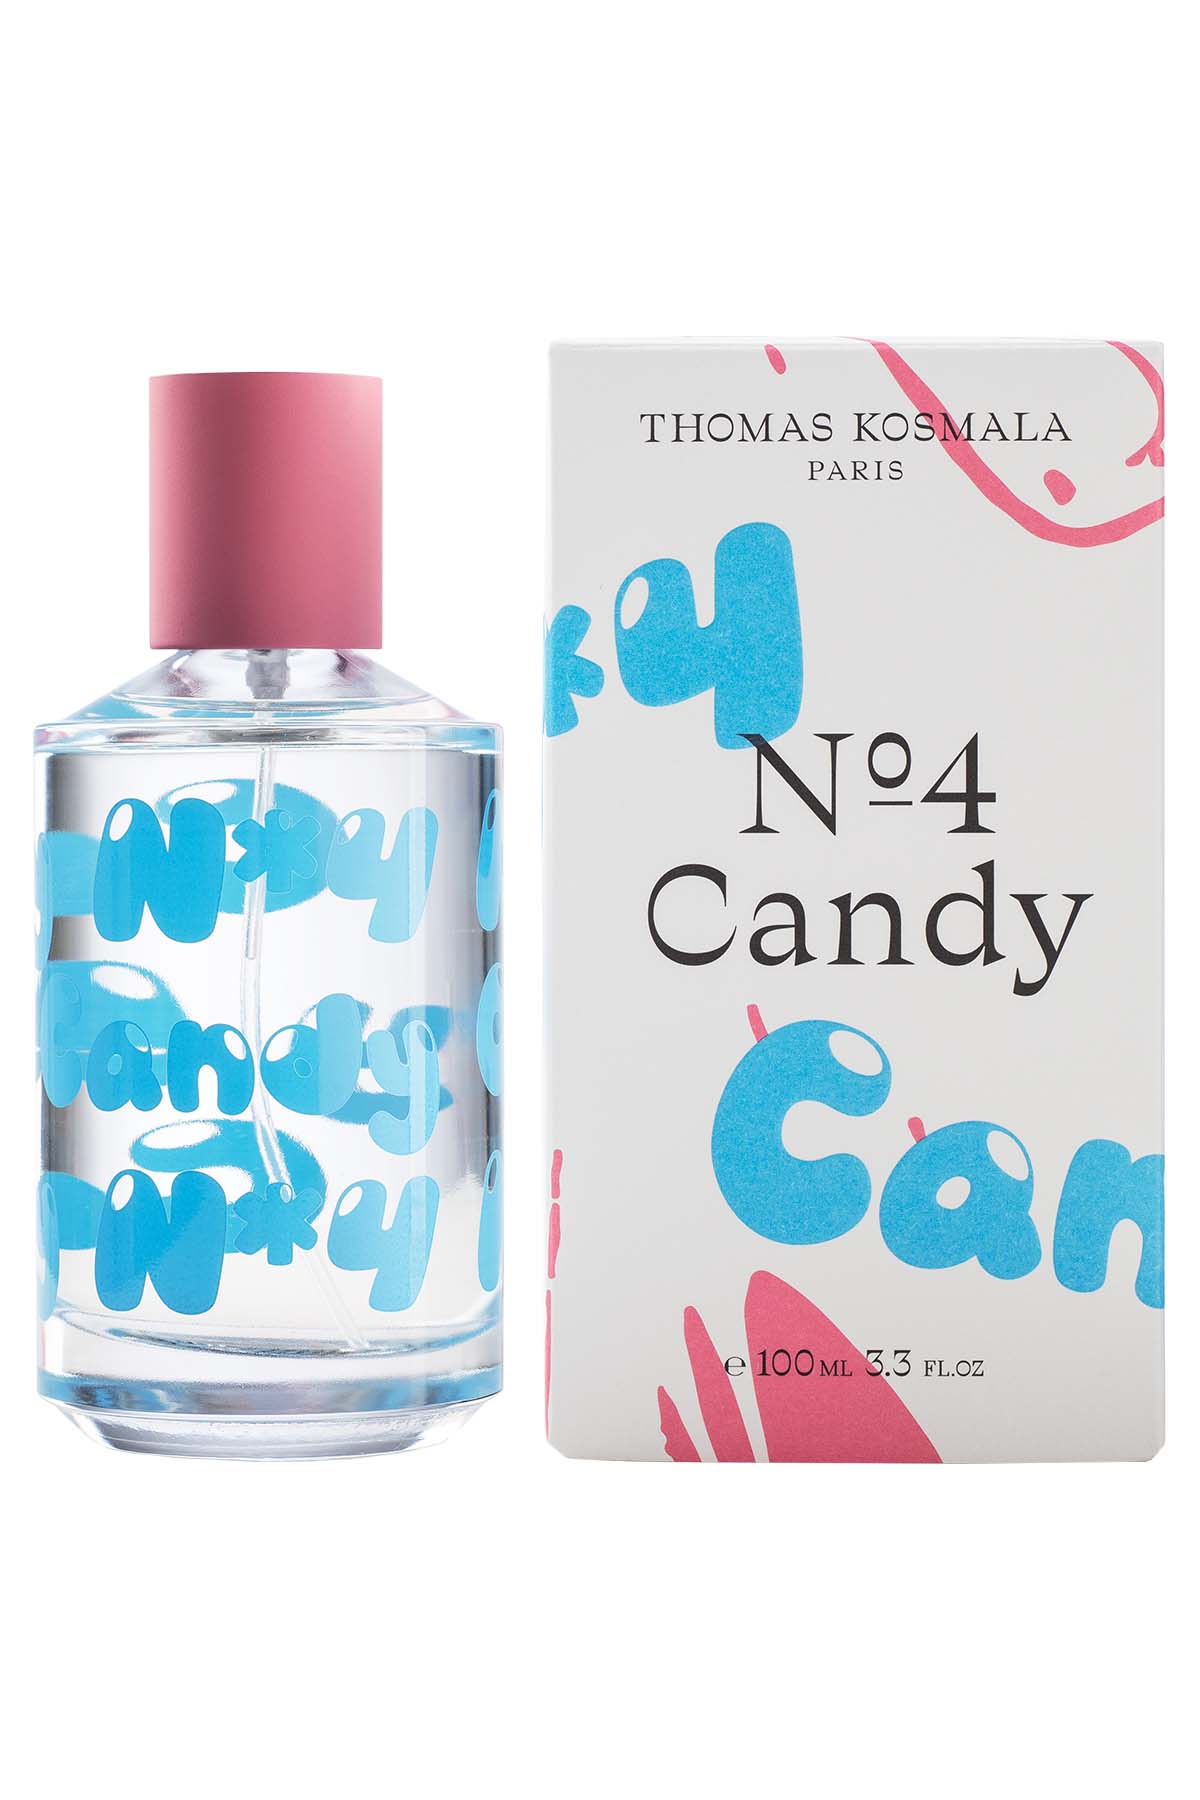 Thomas Kosmala Candy